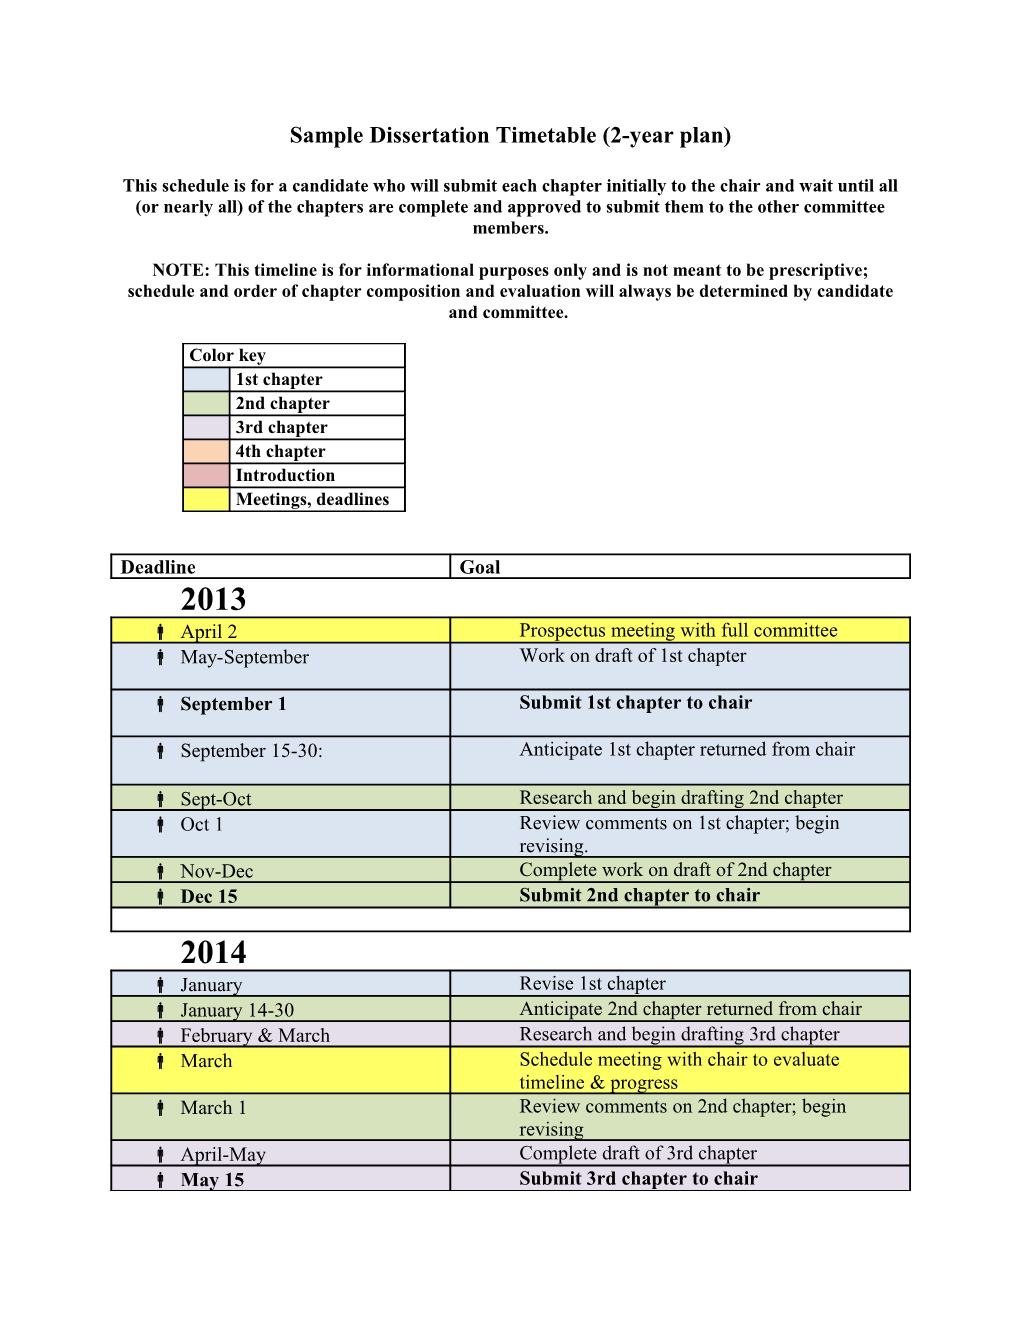 Sample Dissertation Timetable(2-Year Plan)